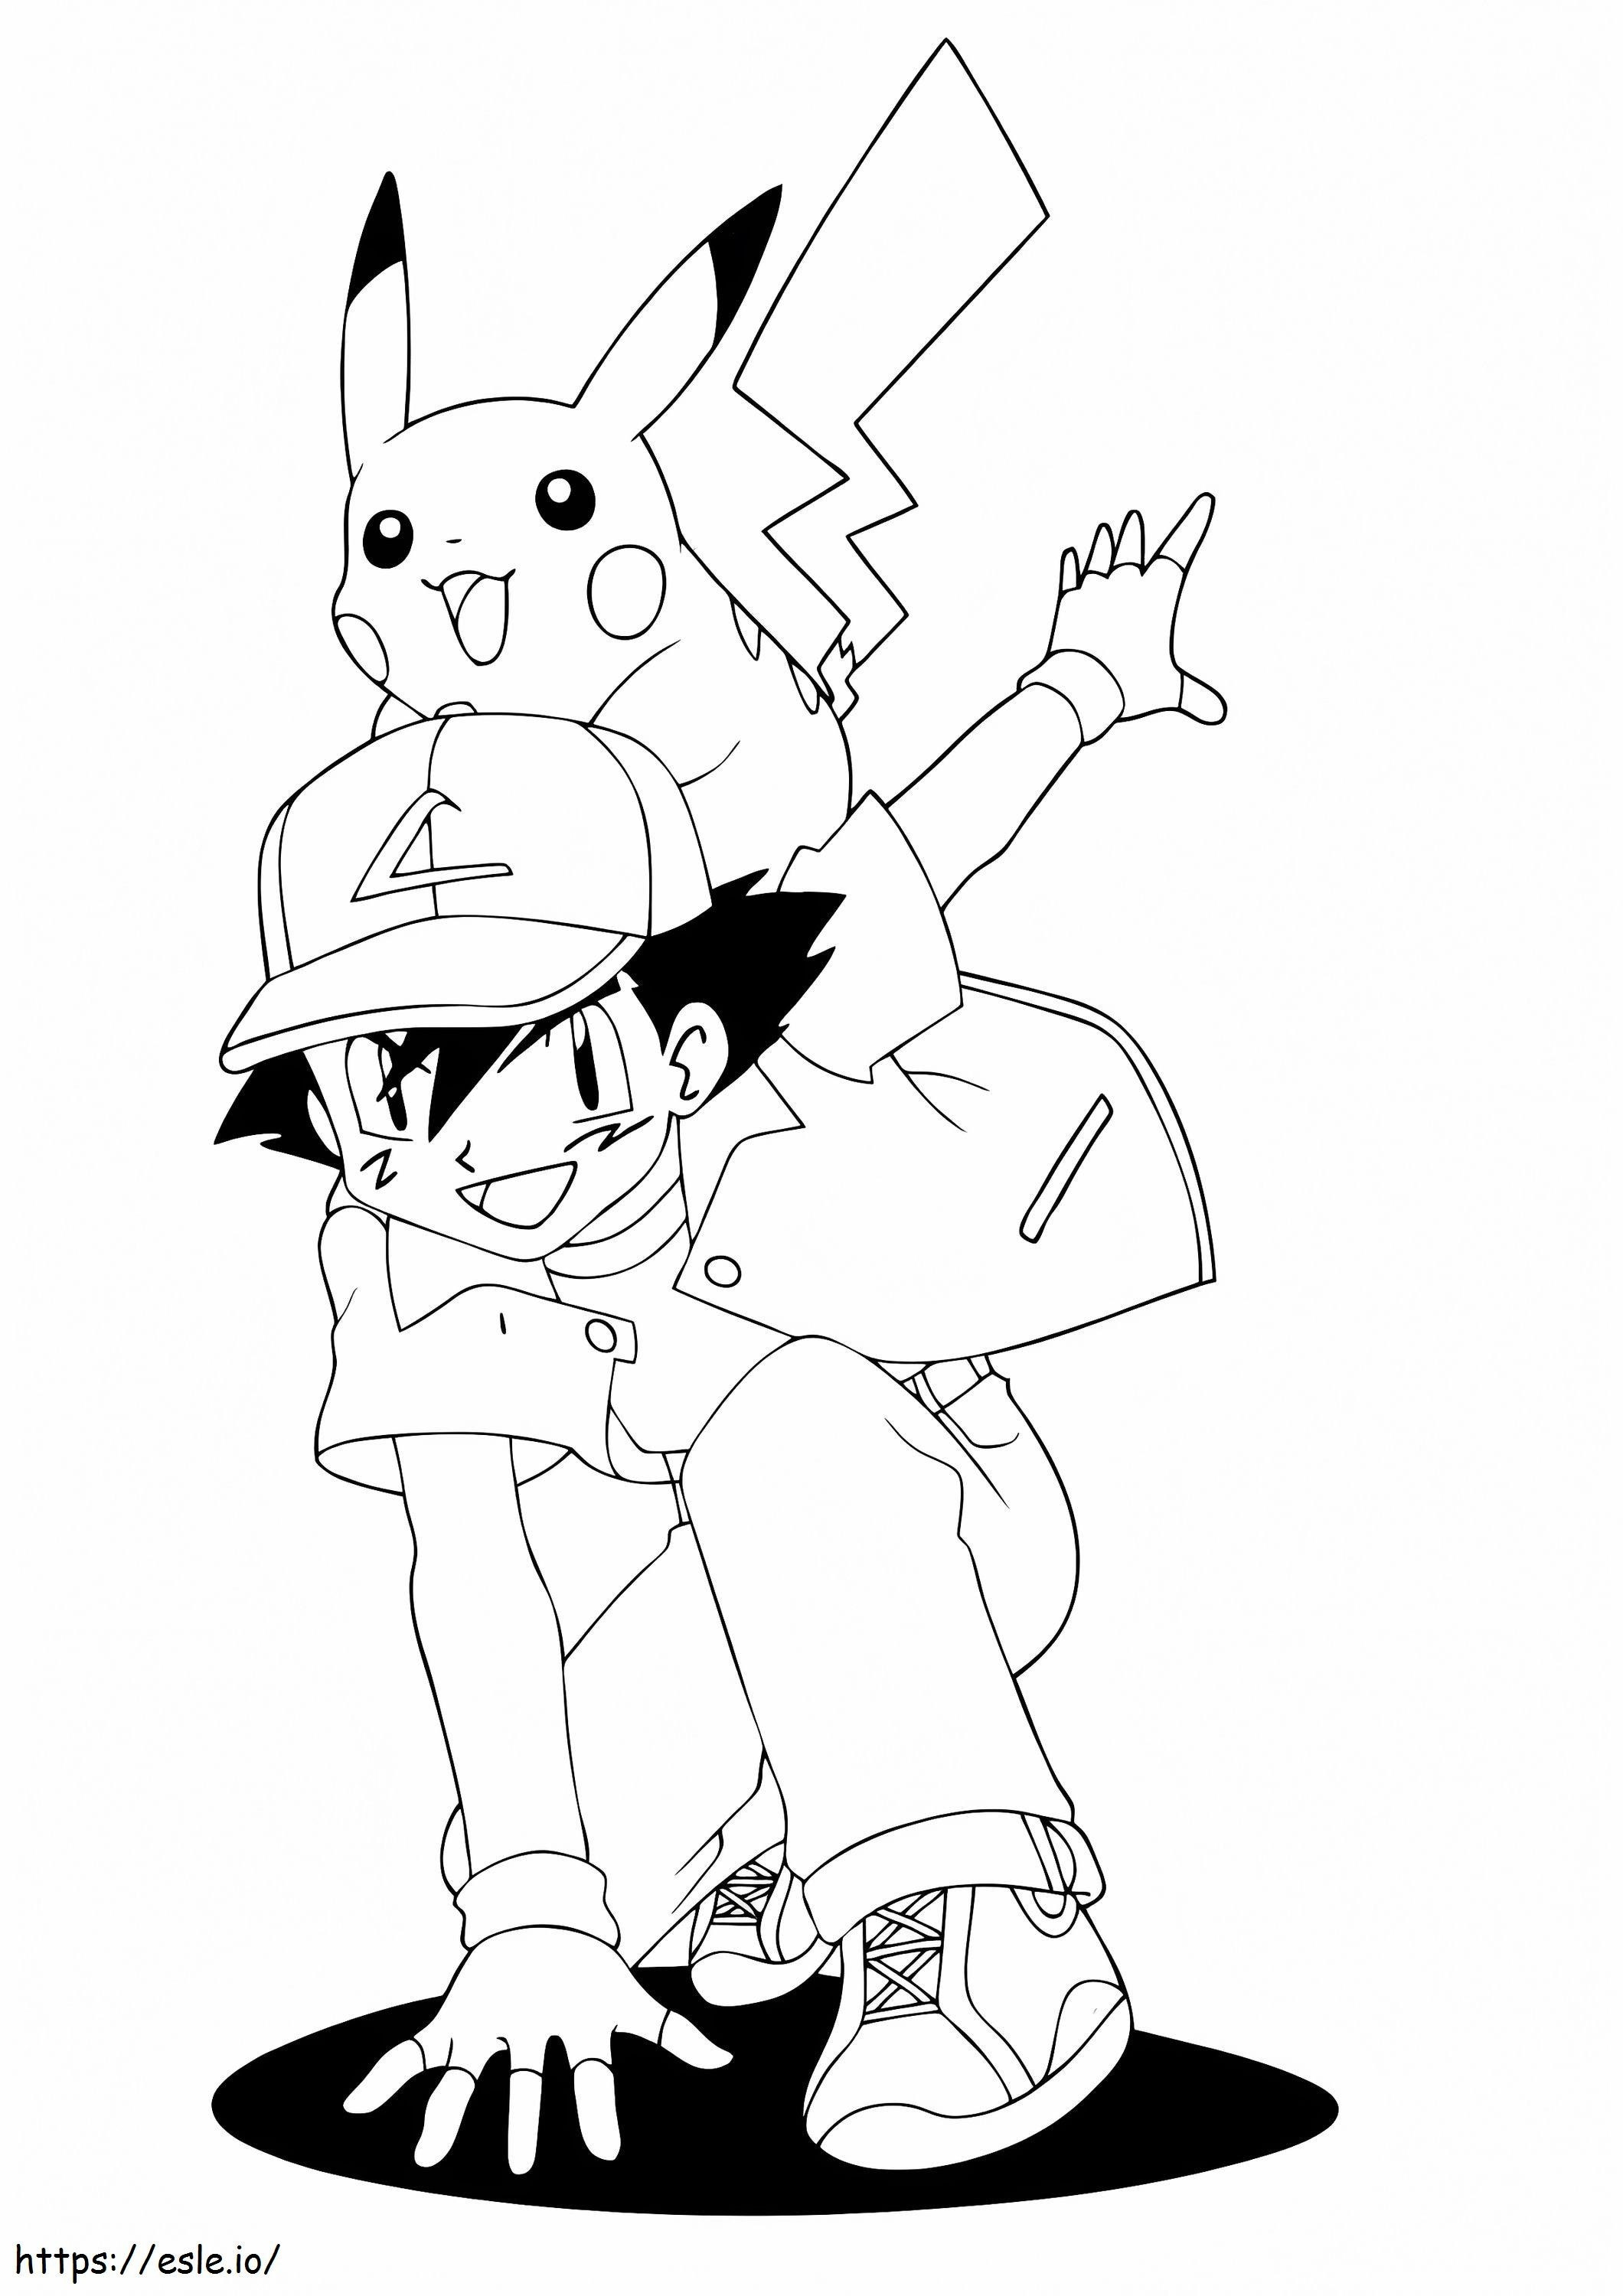 Ash Ketchum ve Pikachu boyama